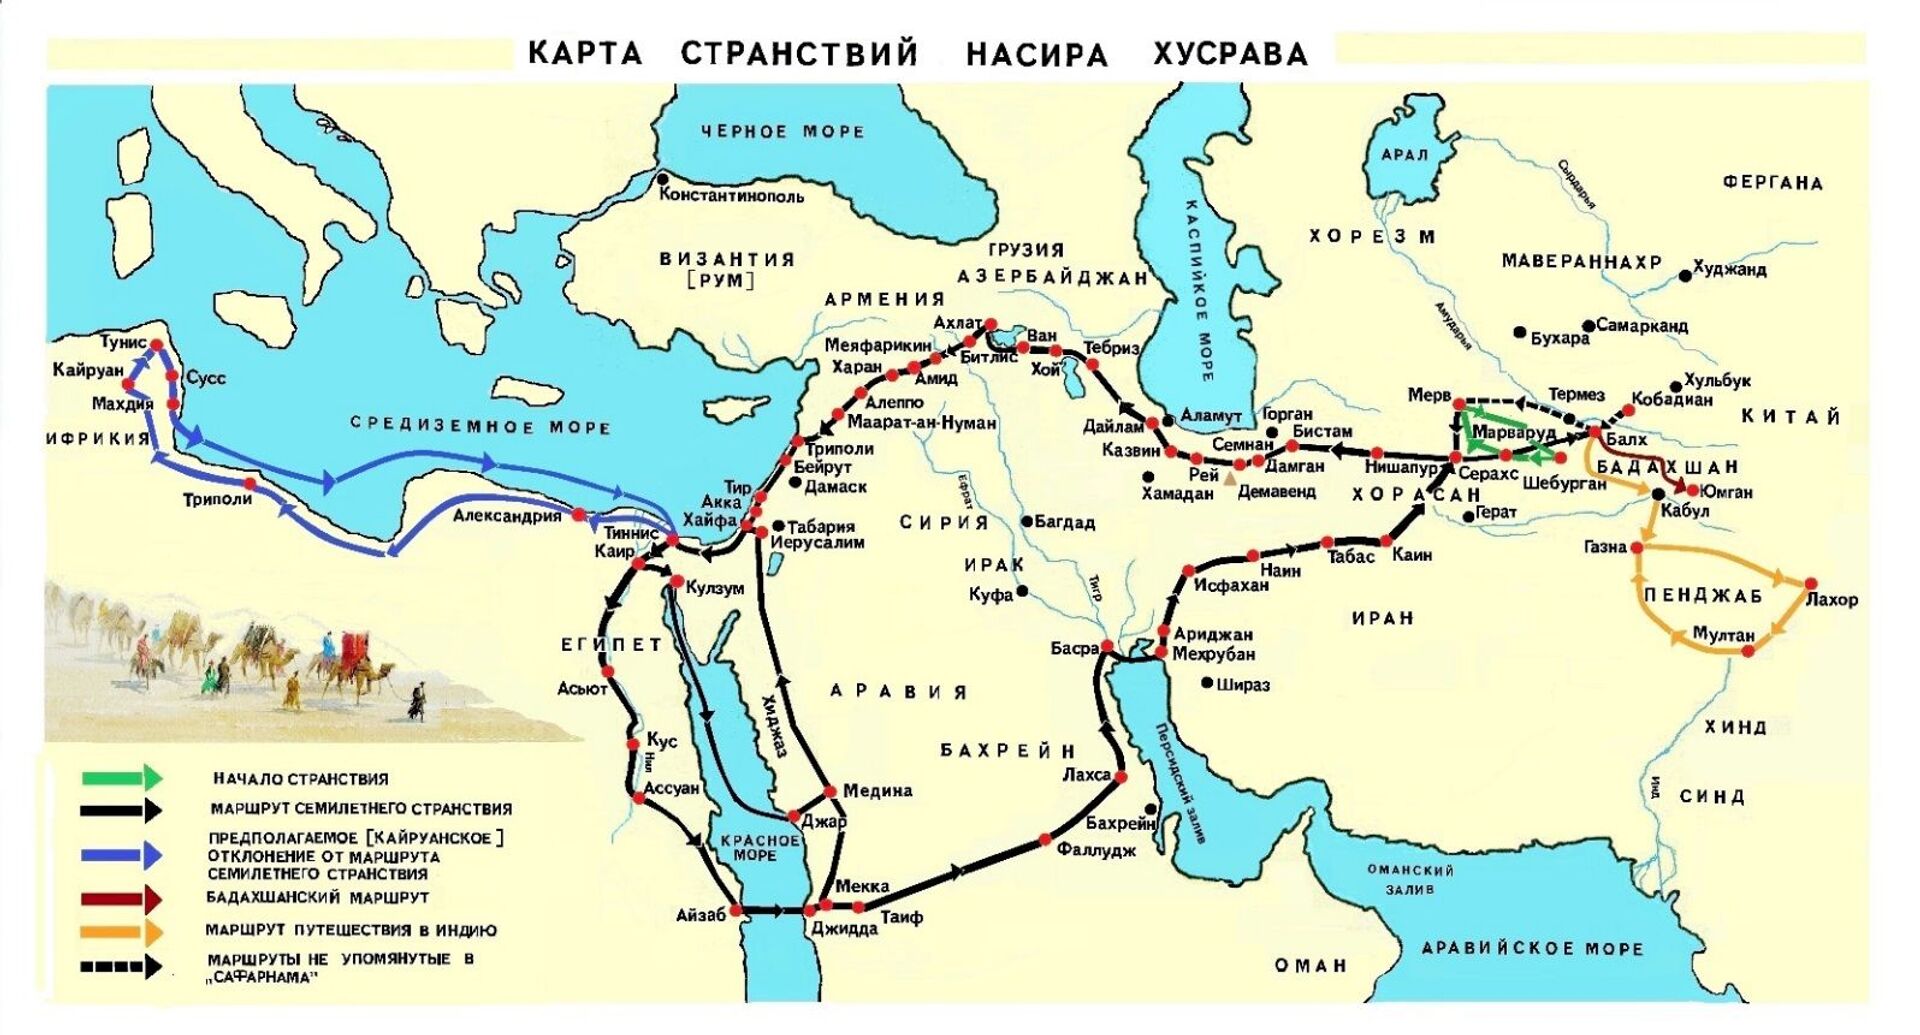 Карта странствий Насира Хусрава - Sputnik Таджикистан, 1920, 06.04.2021